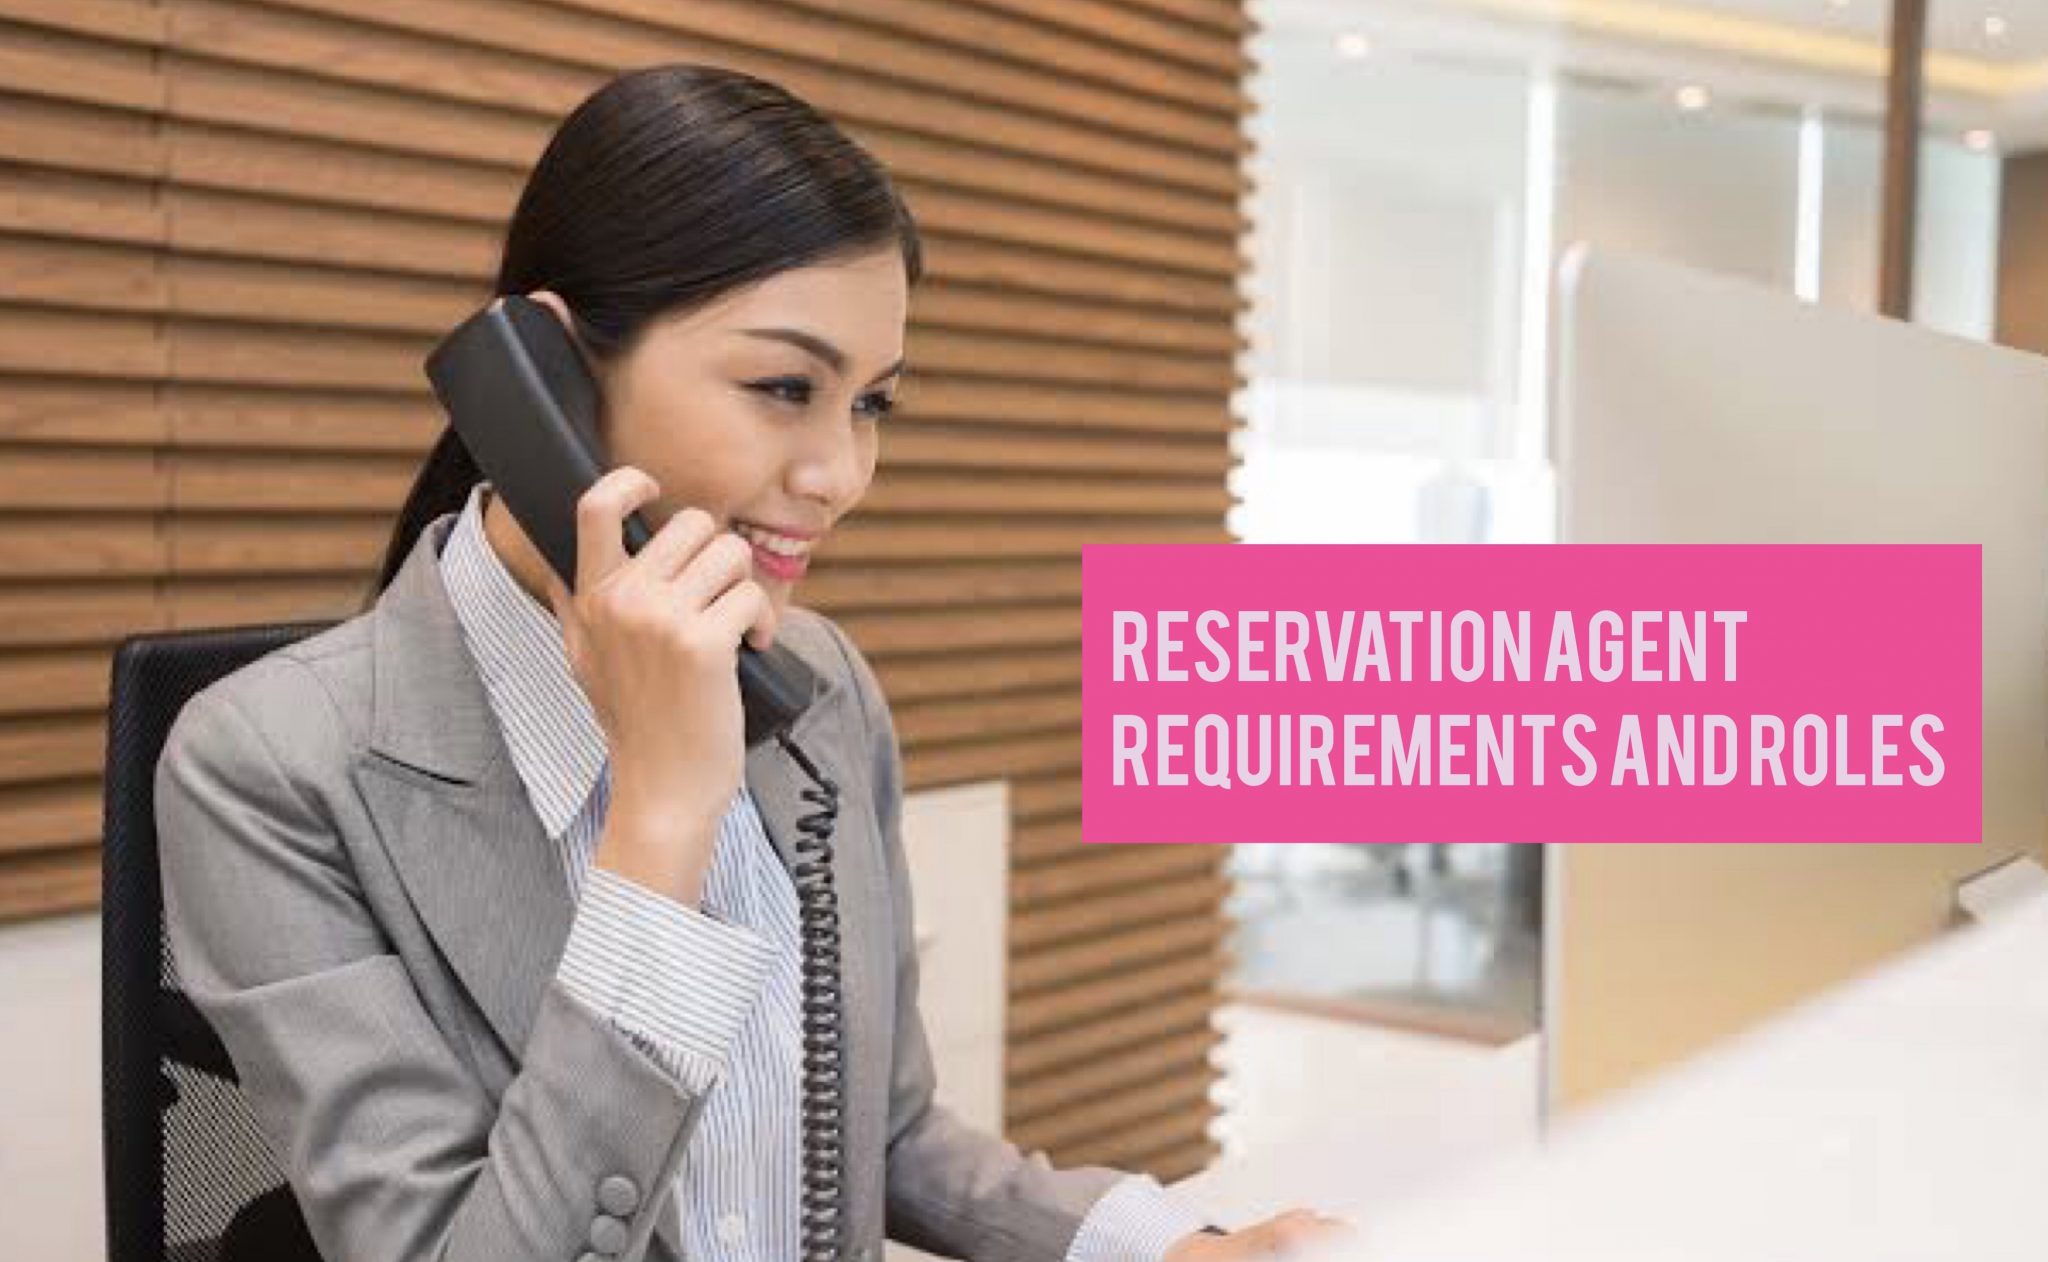 travel reservation assistant